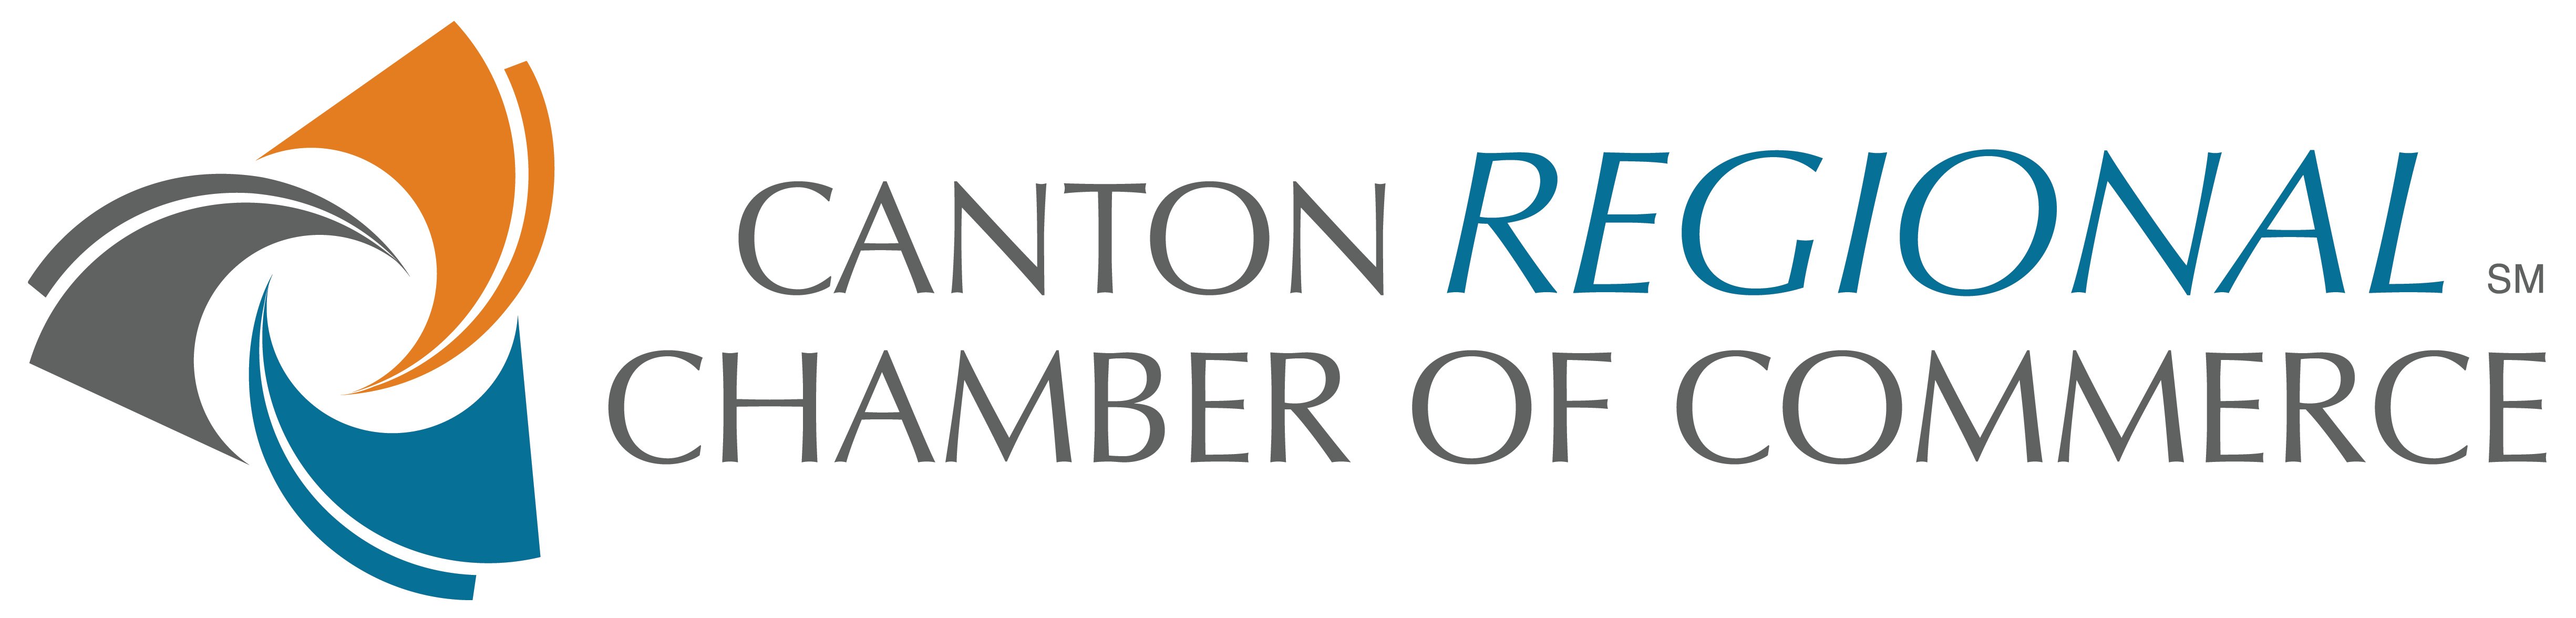 Canton Regional Chamber logo